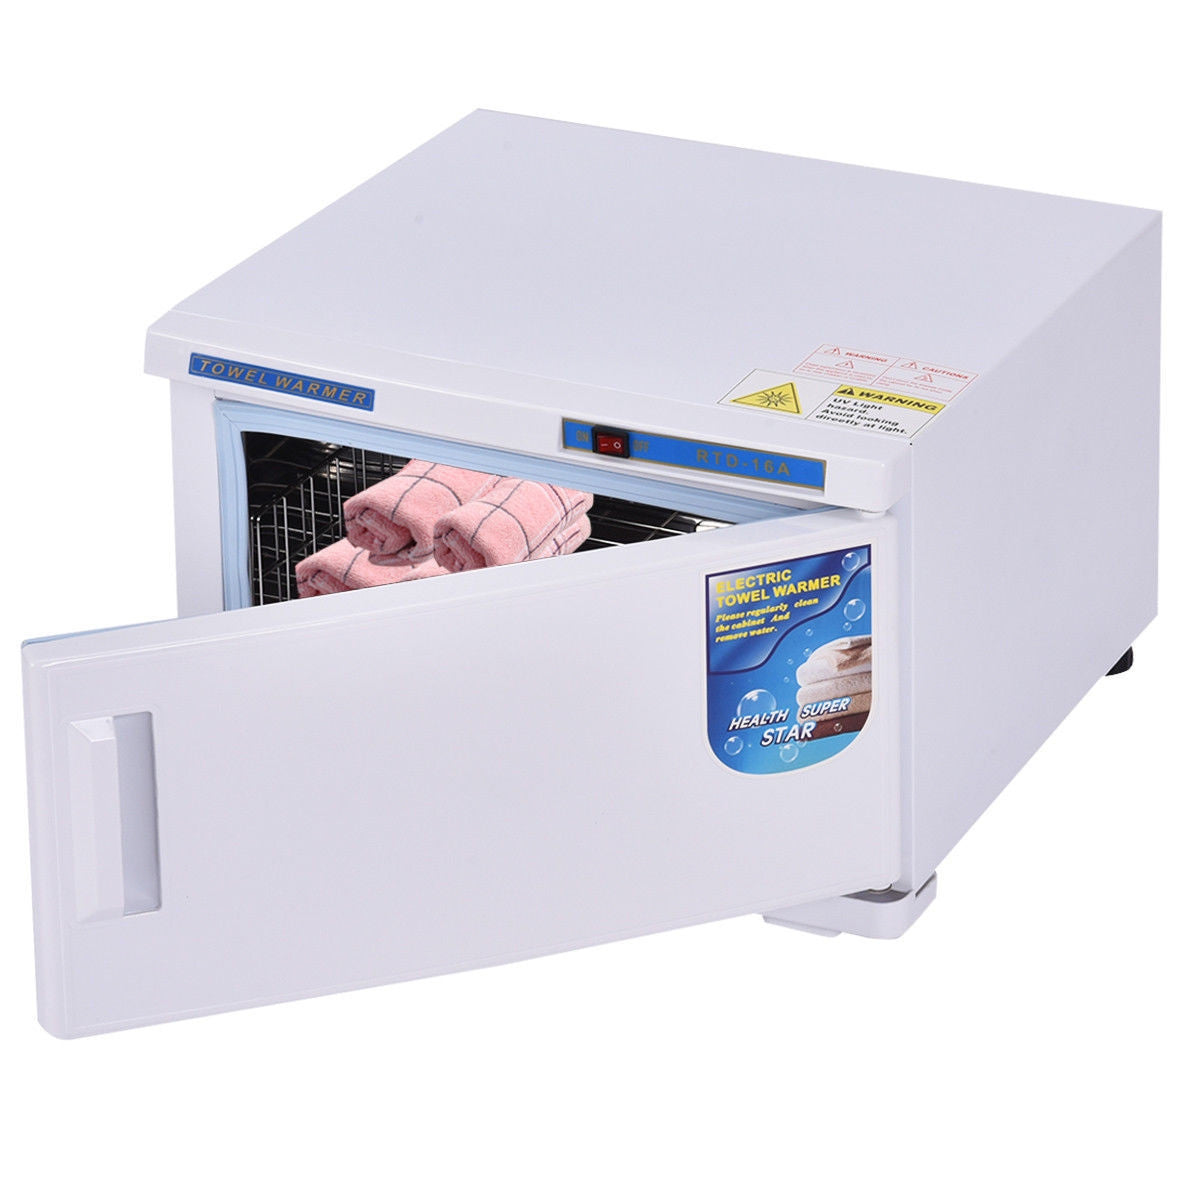 2 In 1 Hot Towel Warmer Cabinet Uv Sterilizer Hb79258 110v Wc